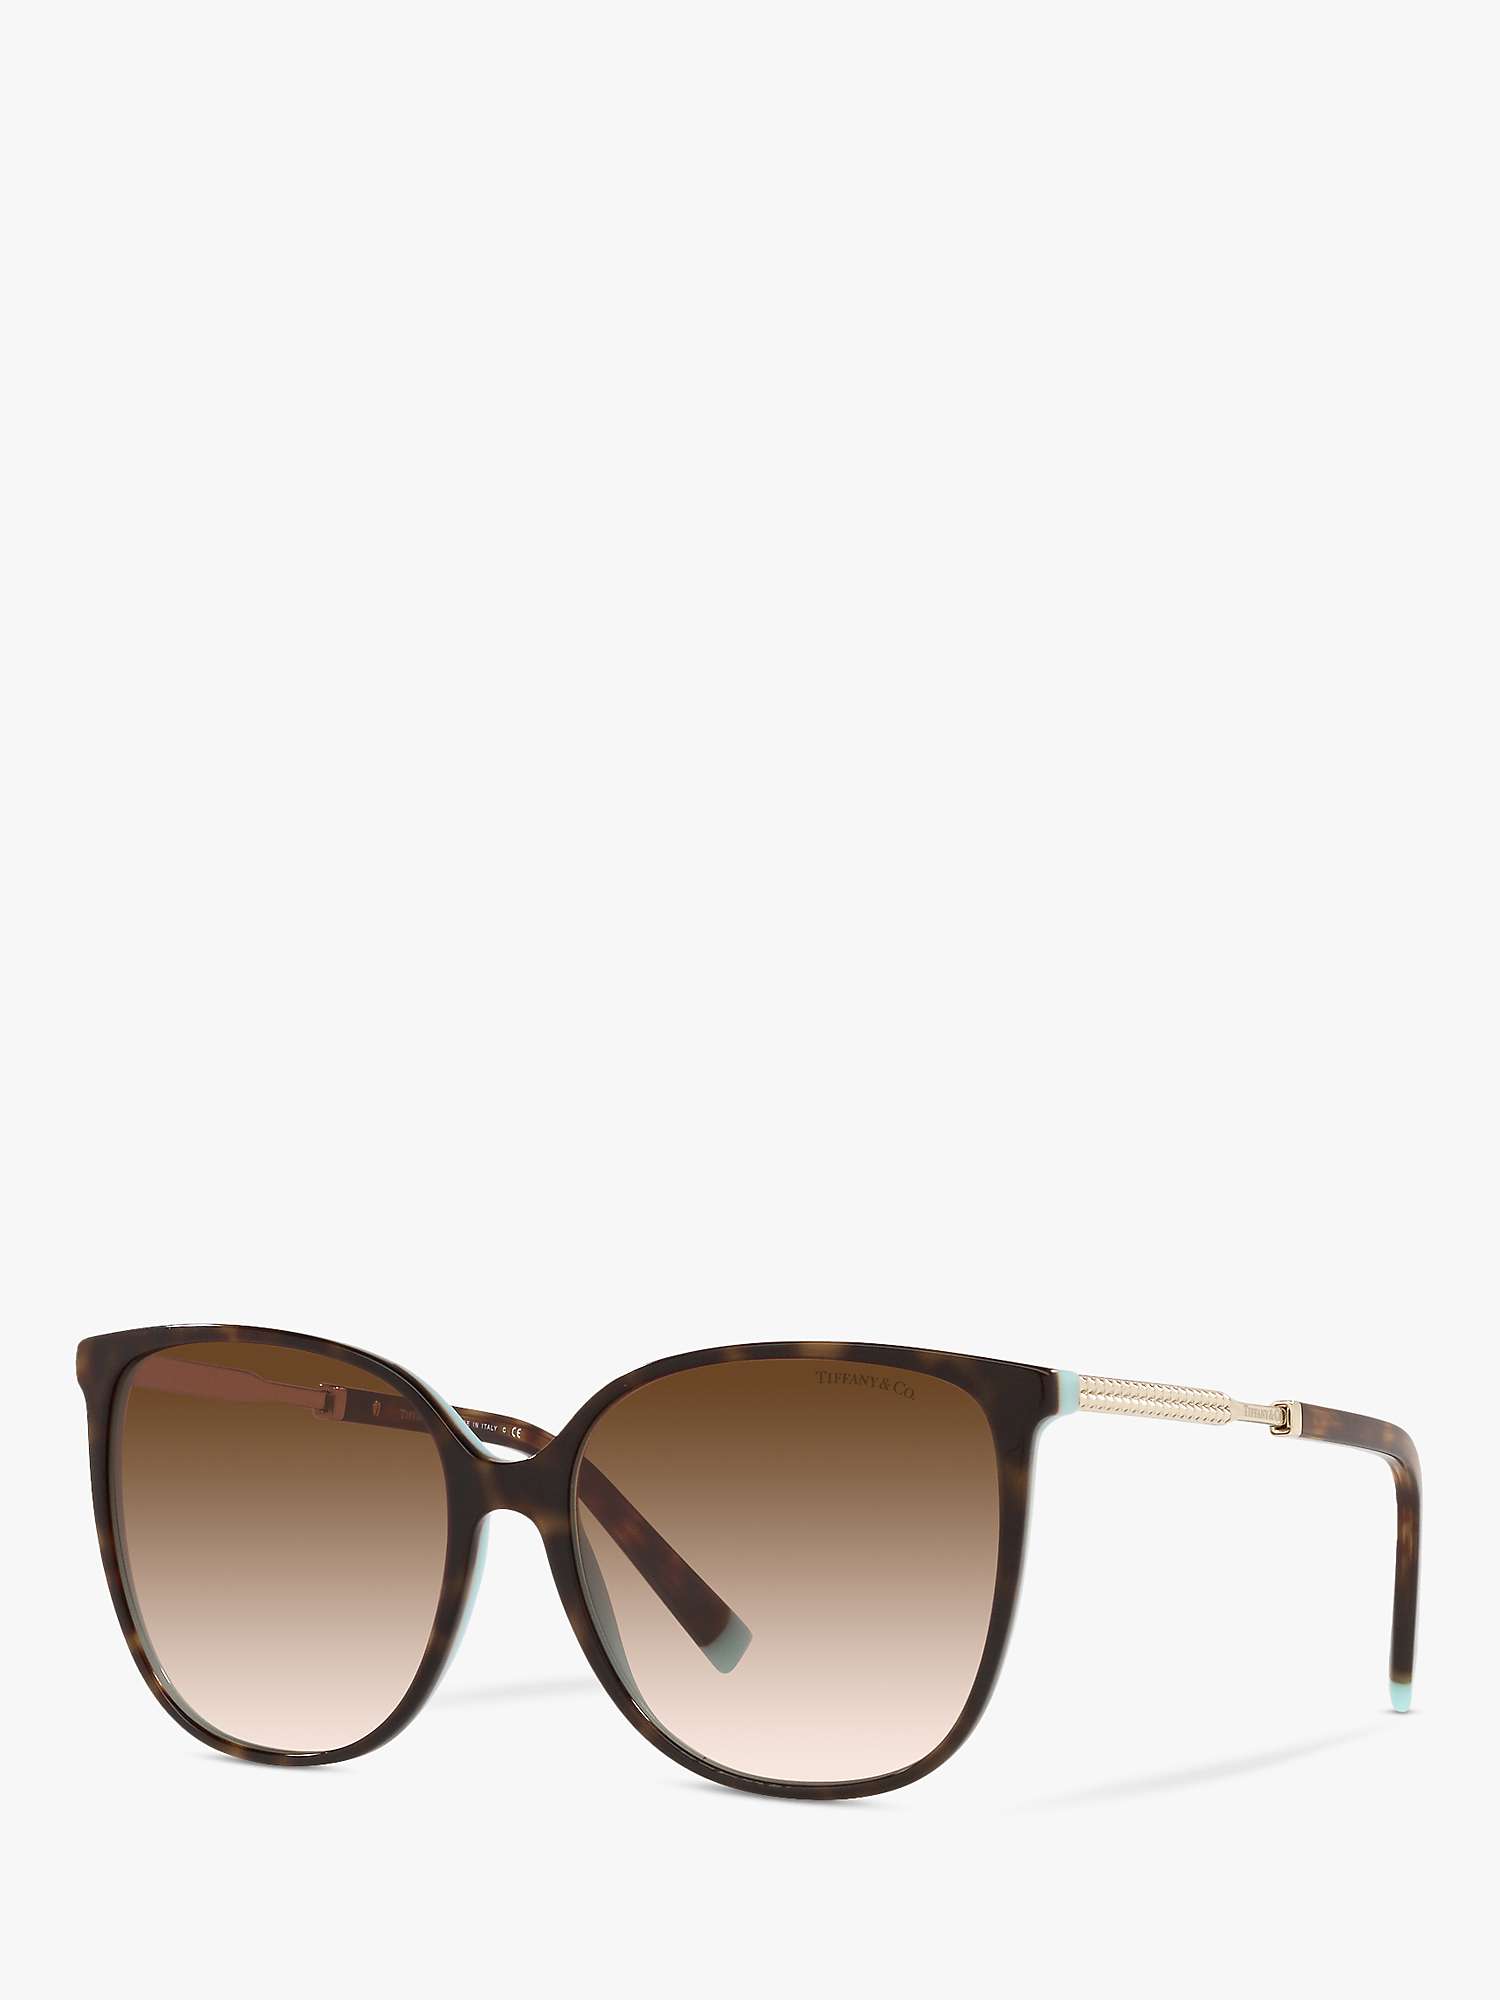 Buy Tiffany & Co TF4184 Women's Oval Sunglasses, Havana/Brown Gradient Online at johnlewis.com